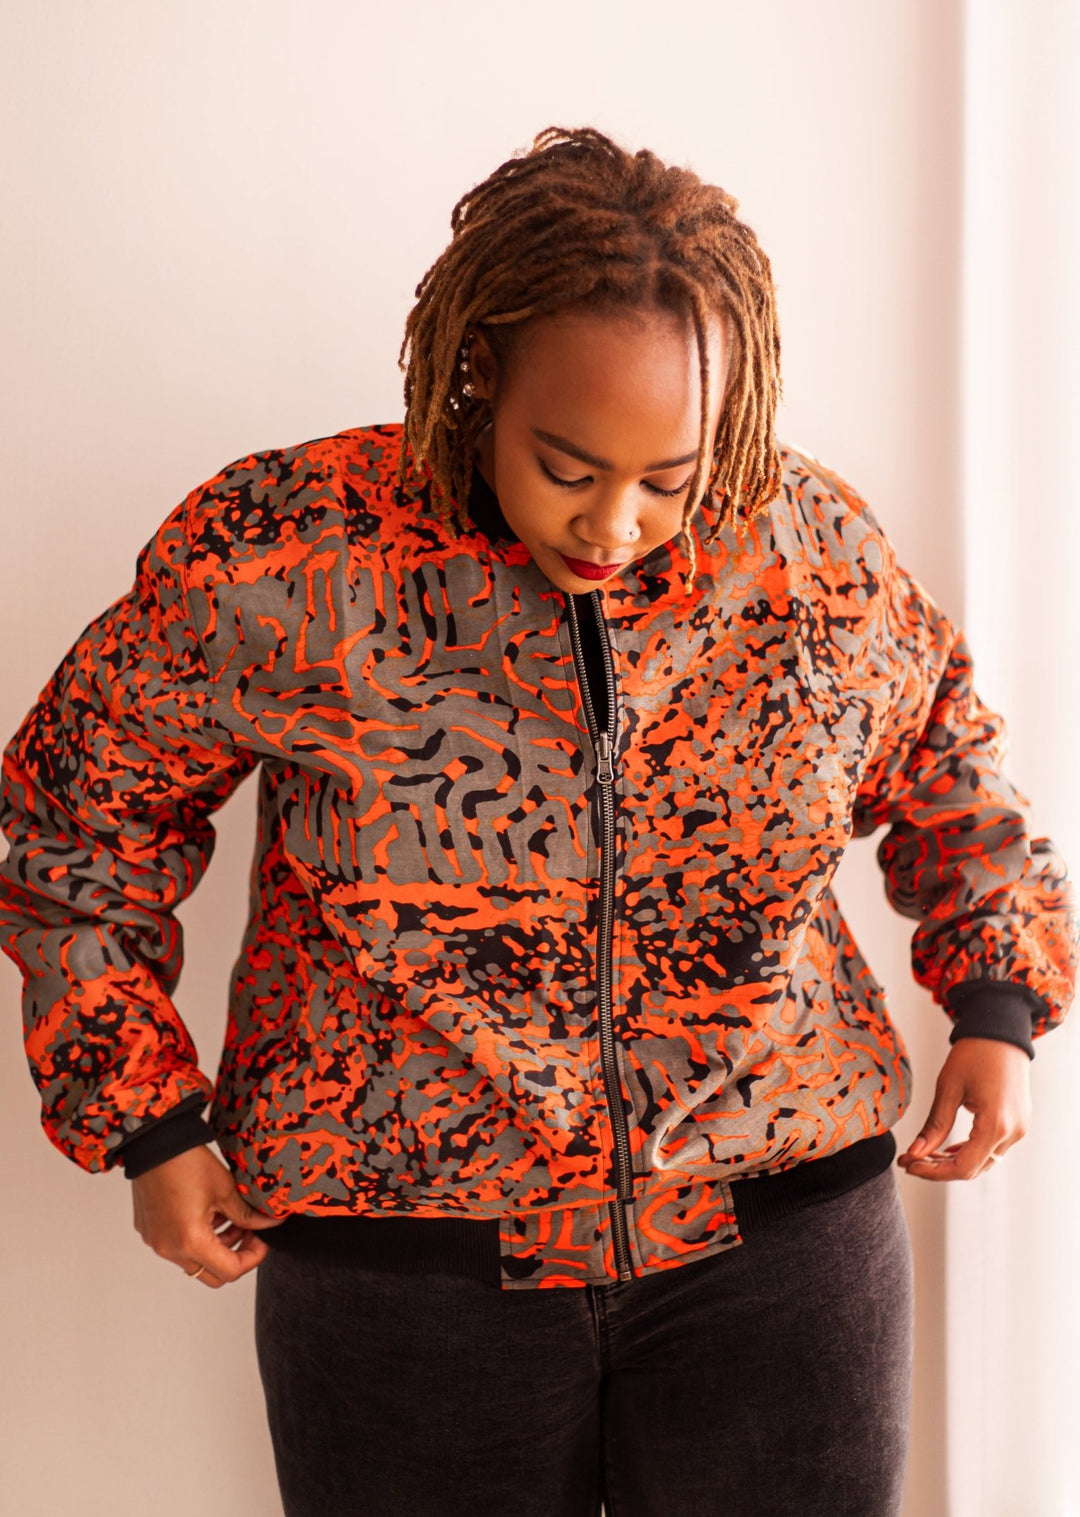 Bomberjacke ‚Kijeshi‘ für 70 € last jacket! - mikono.africa Jacken aus Kenia bunte Bomberjacke Partyjacke faire sozial nachhaltig designed in Kenia